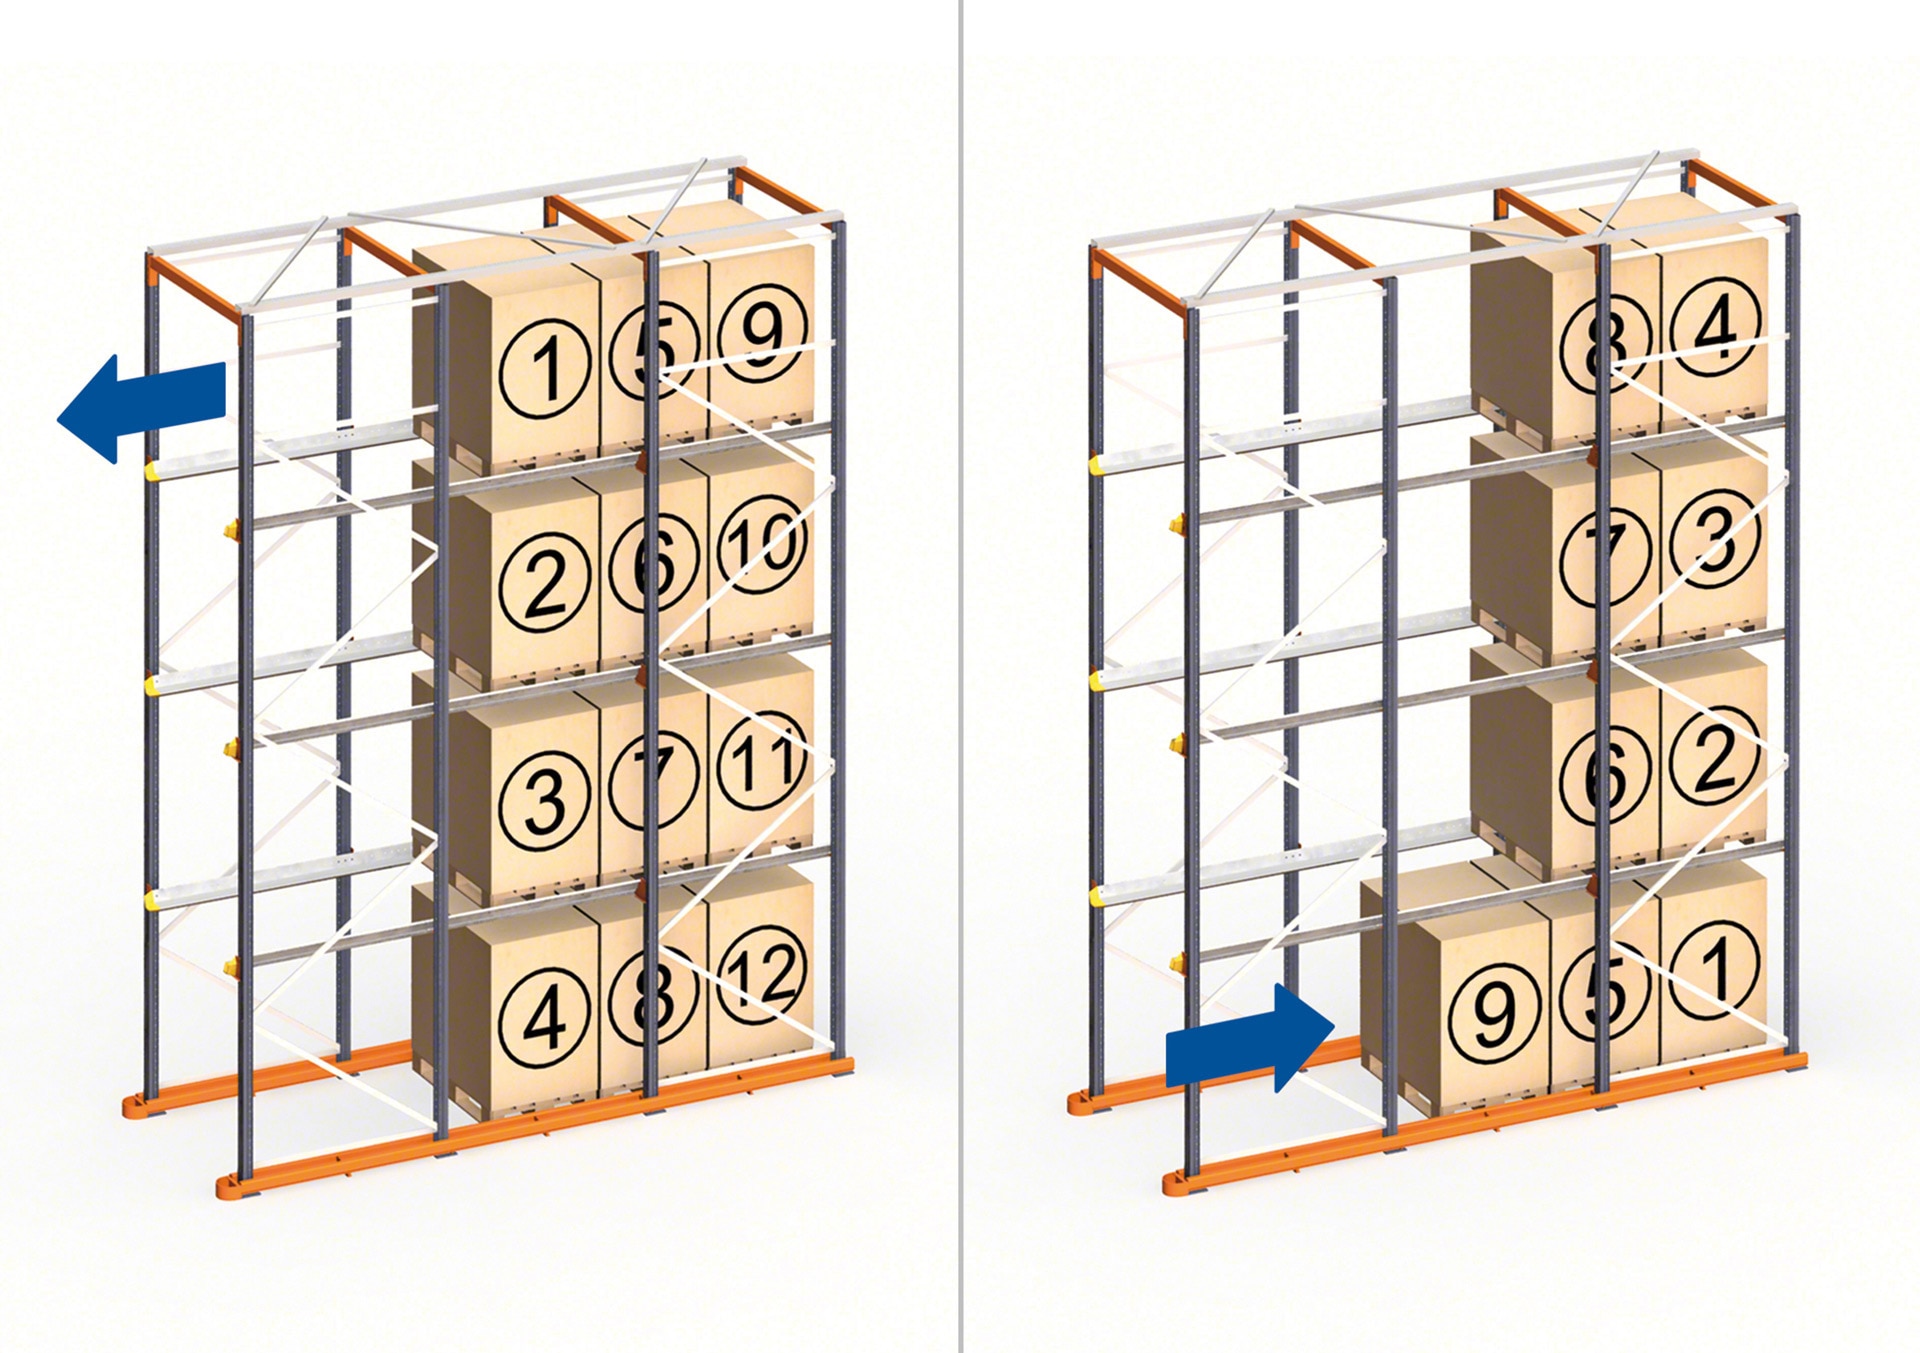 As estantes compactas drive-in funcionam em armazéns que utilizam o método de ordem de carga LIFO